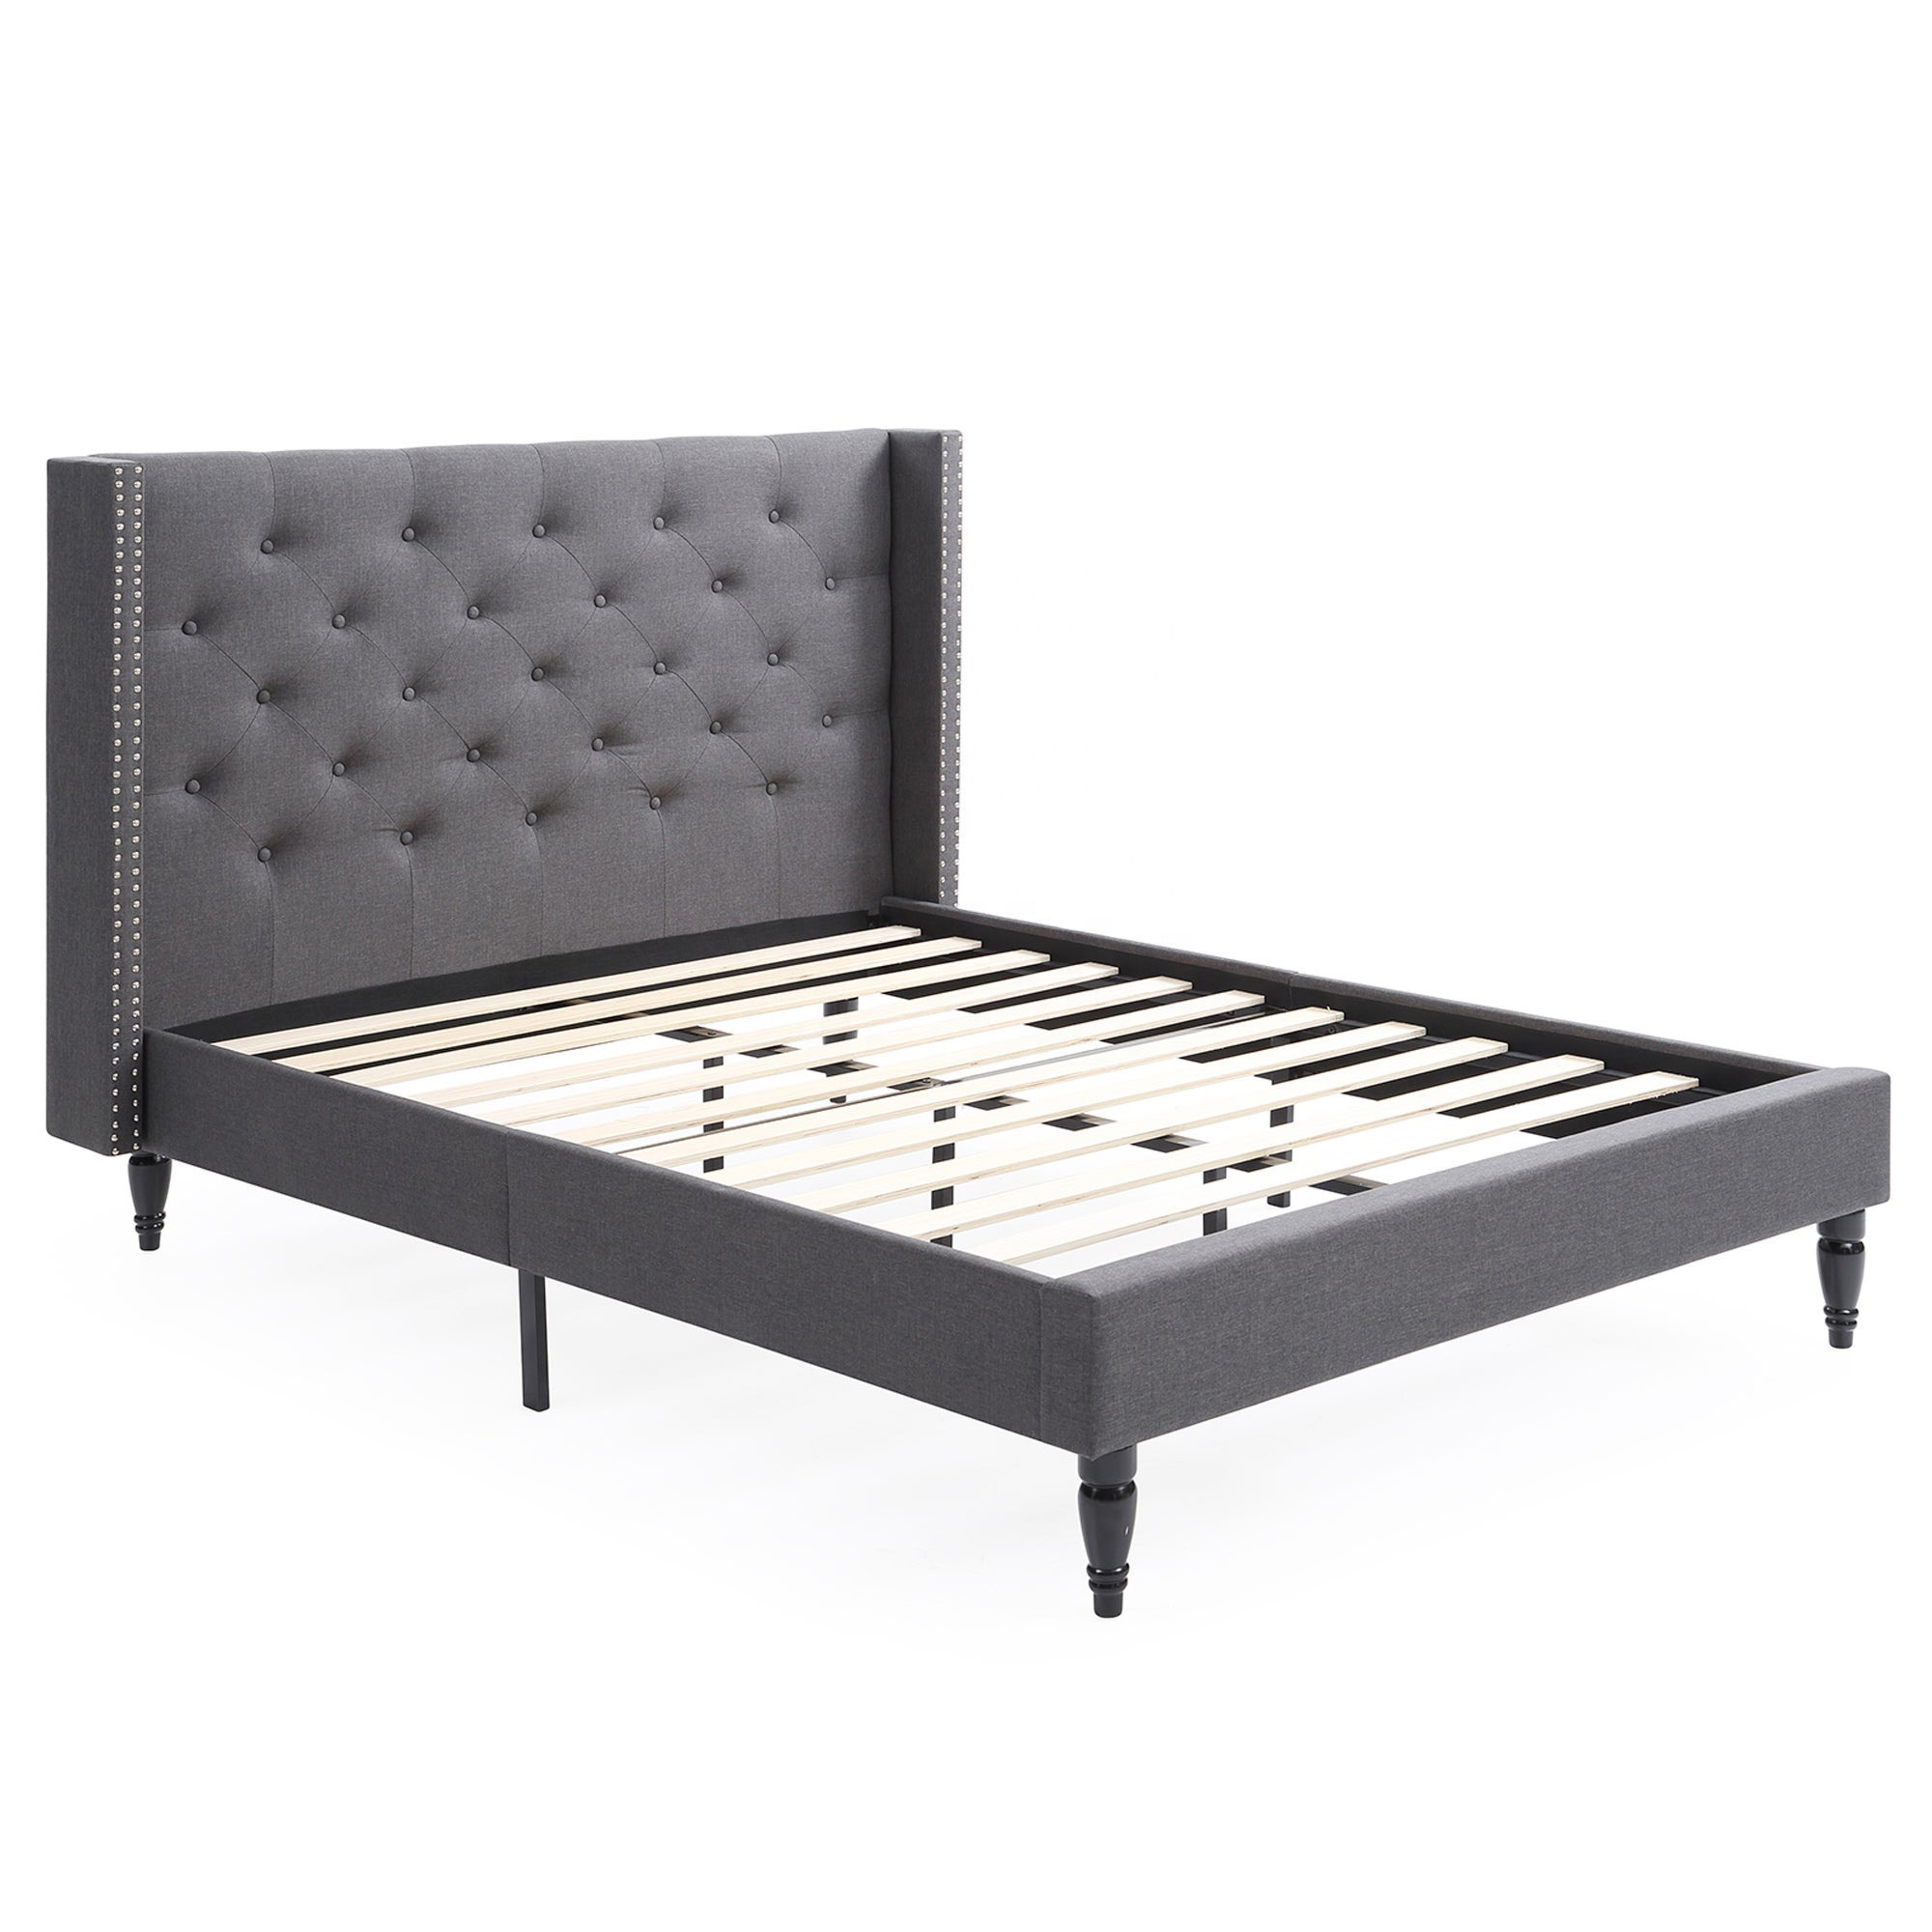 King Bed: a Luxury Mattress 1